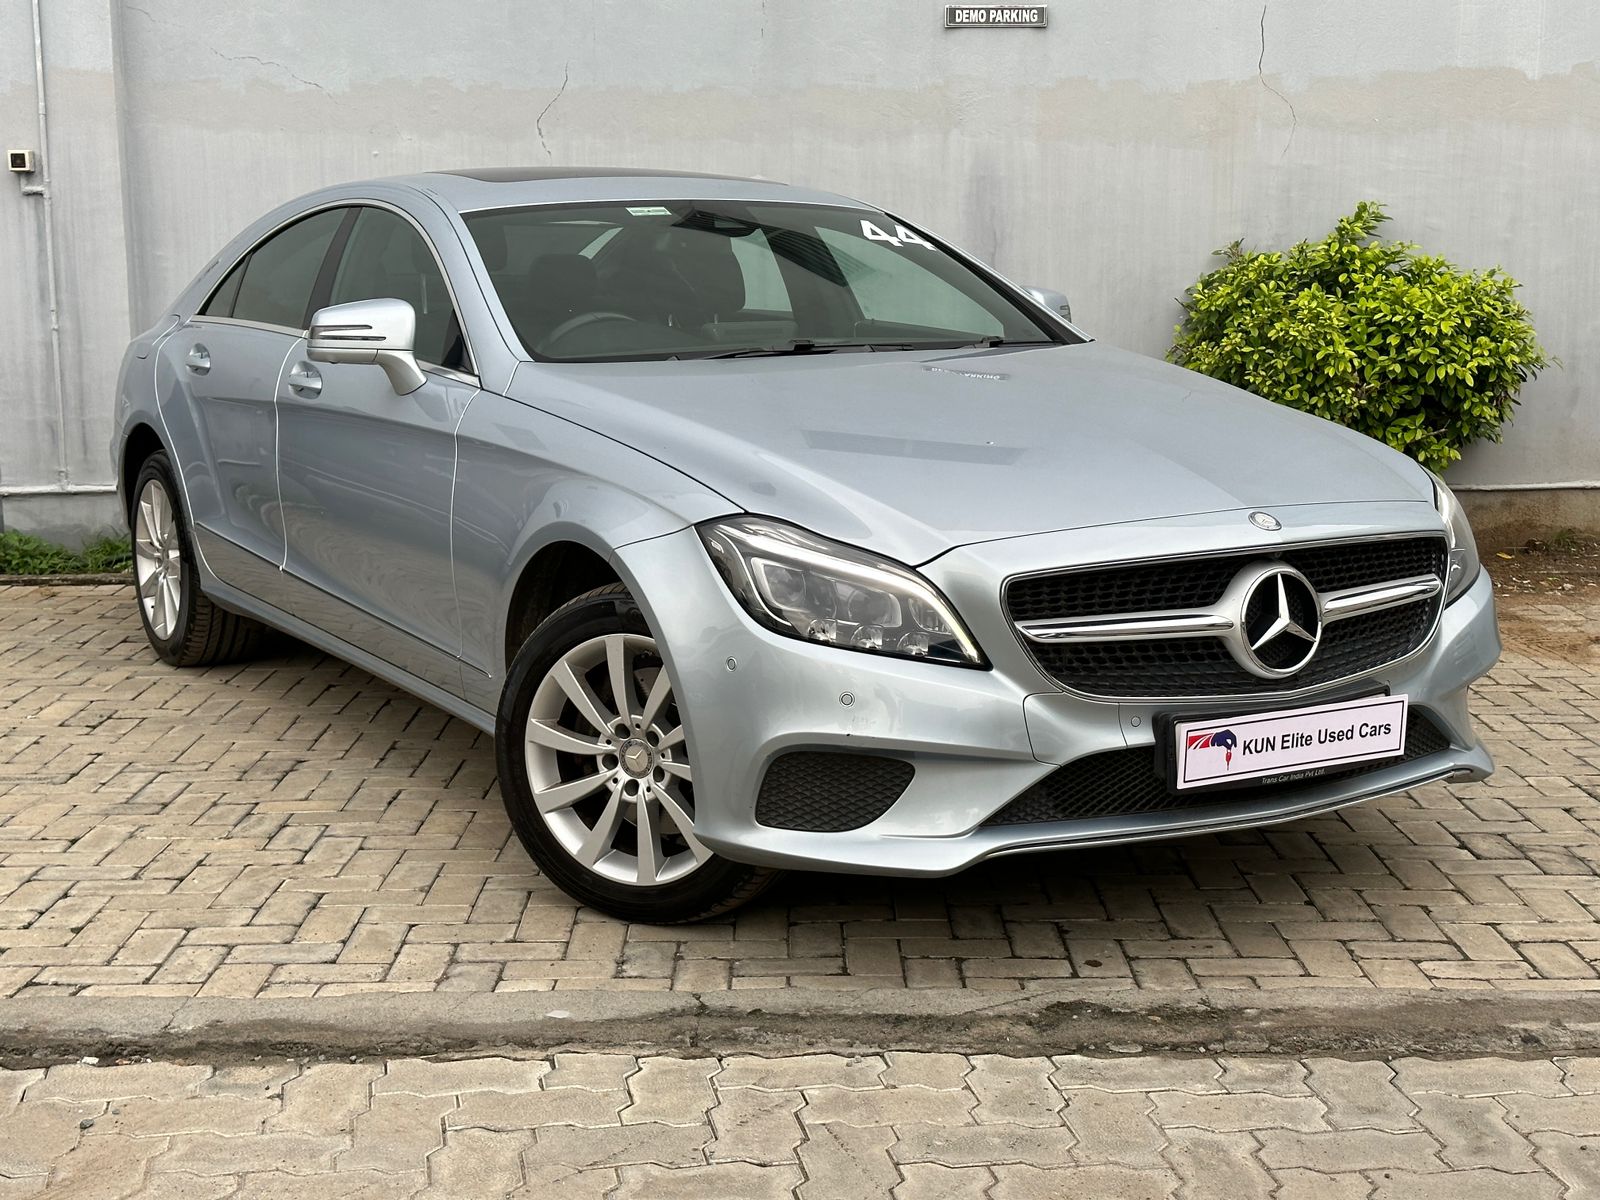 Mercedes benz CLS - 2016 model - 38261 kms